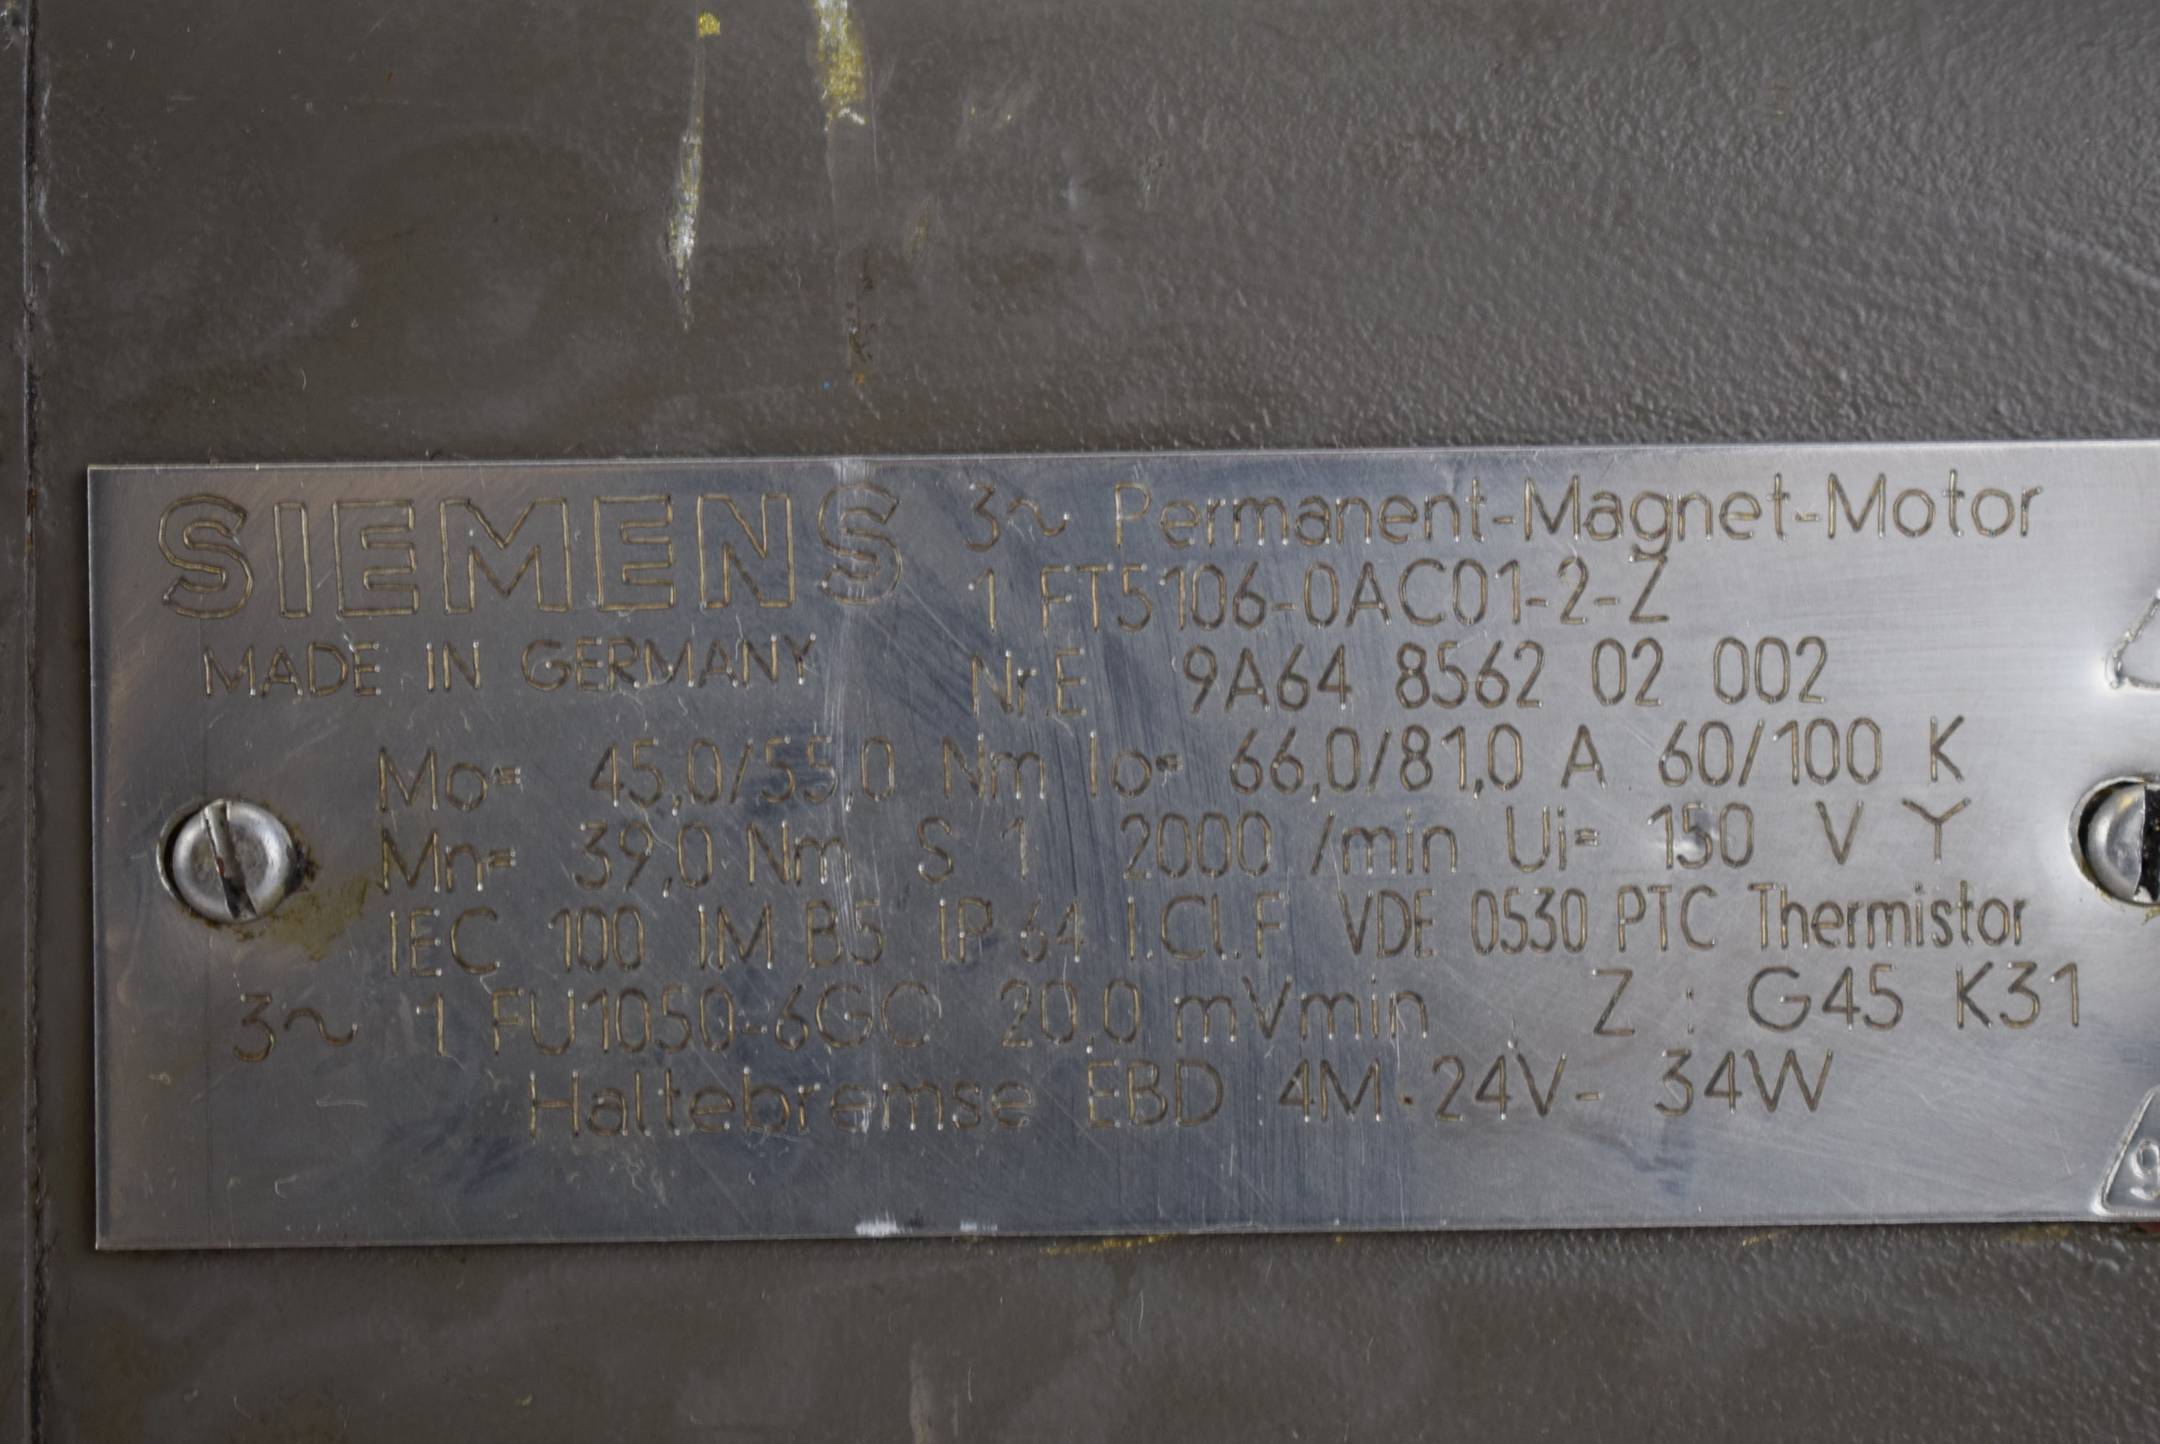 Siemens 3~Permanent-Magnet-Motor 1FT5106-0AC01-2-Z ( 1FT5 106-0AC01-2-Z )